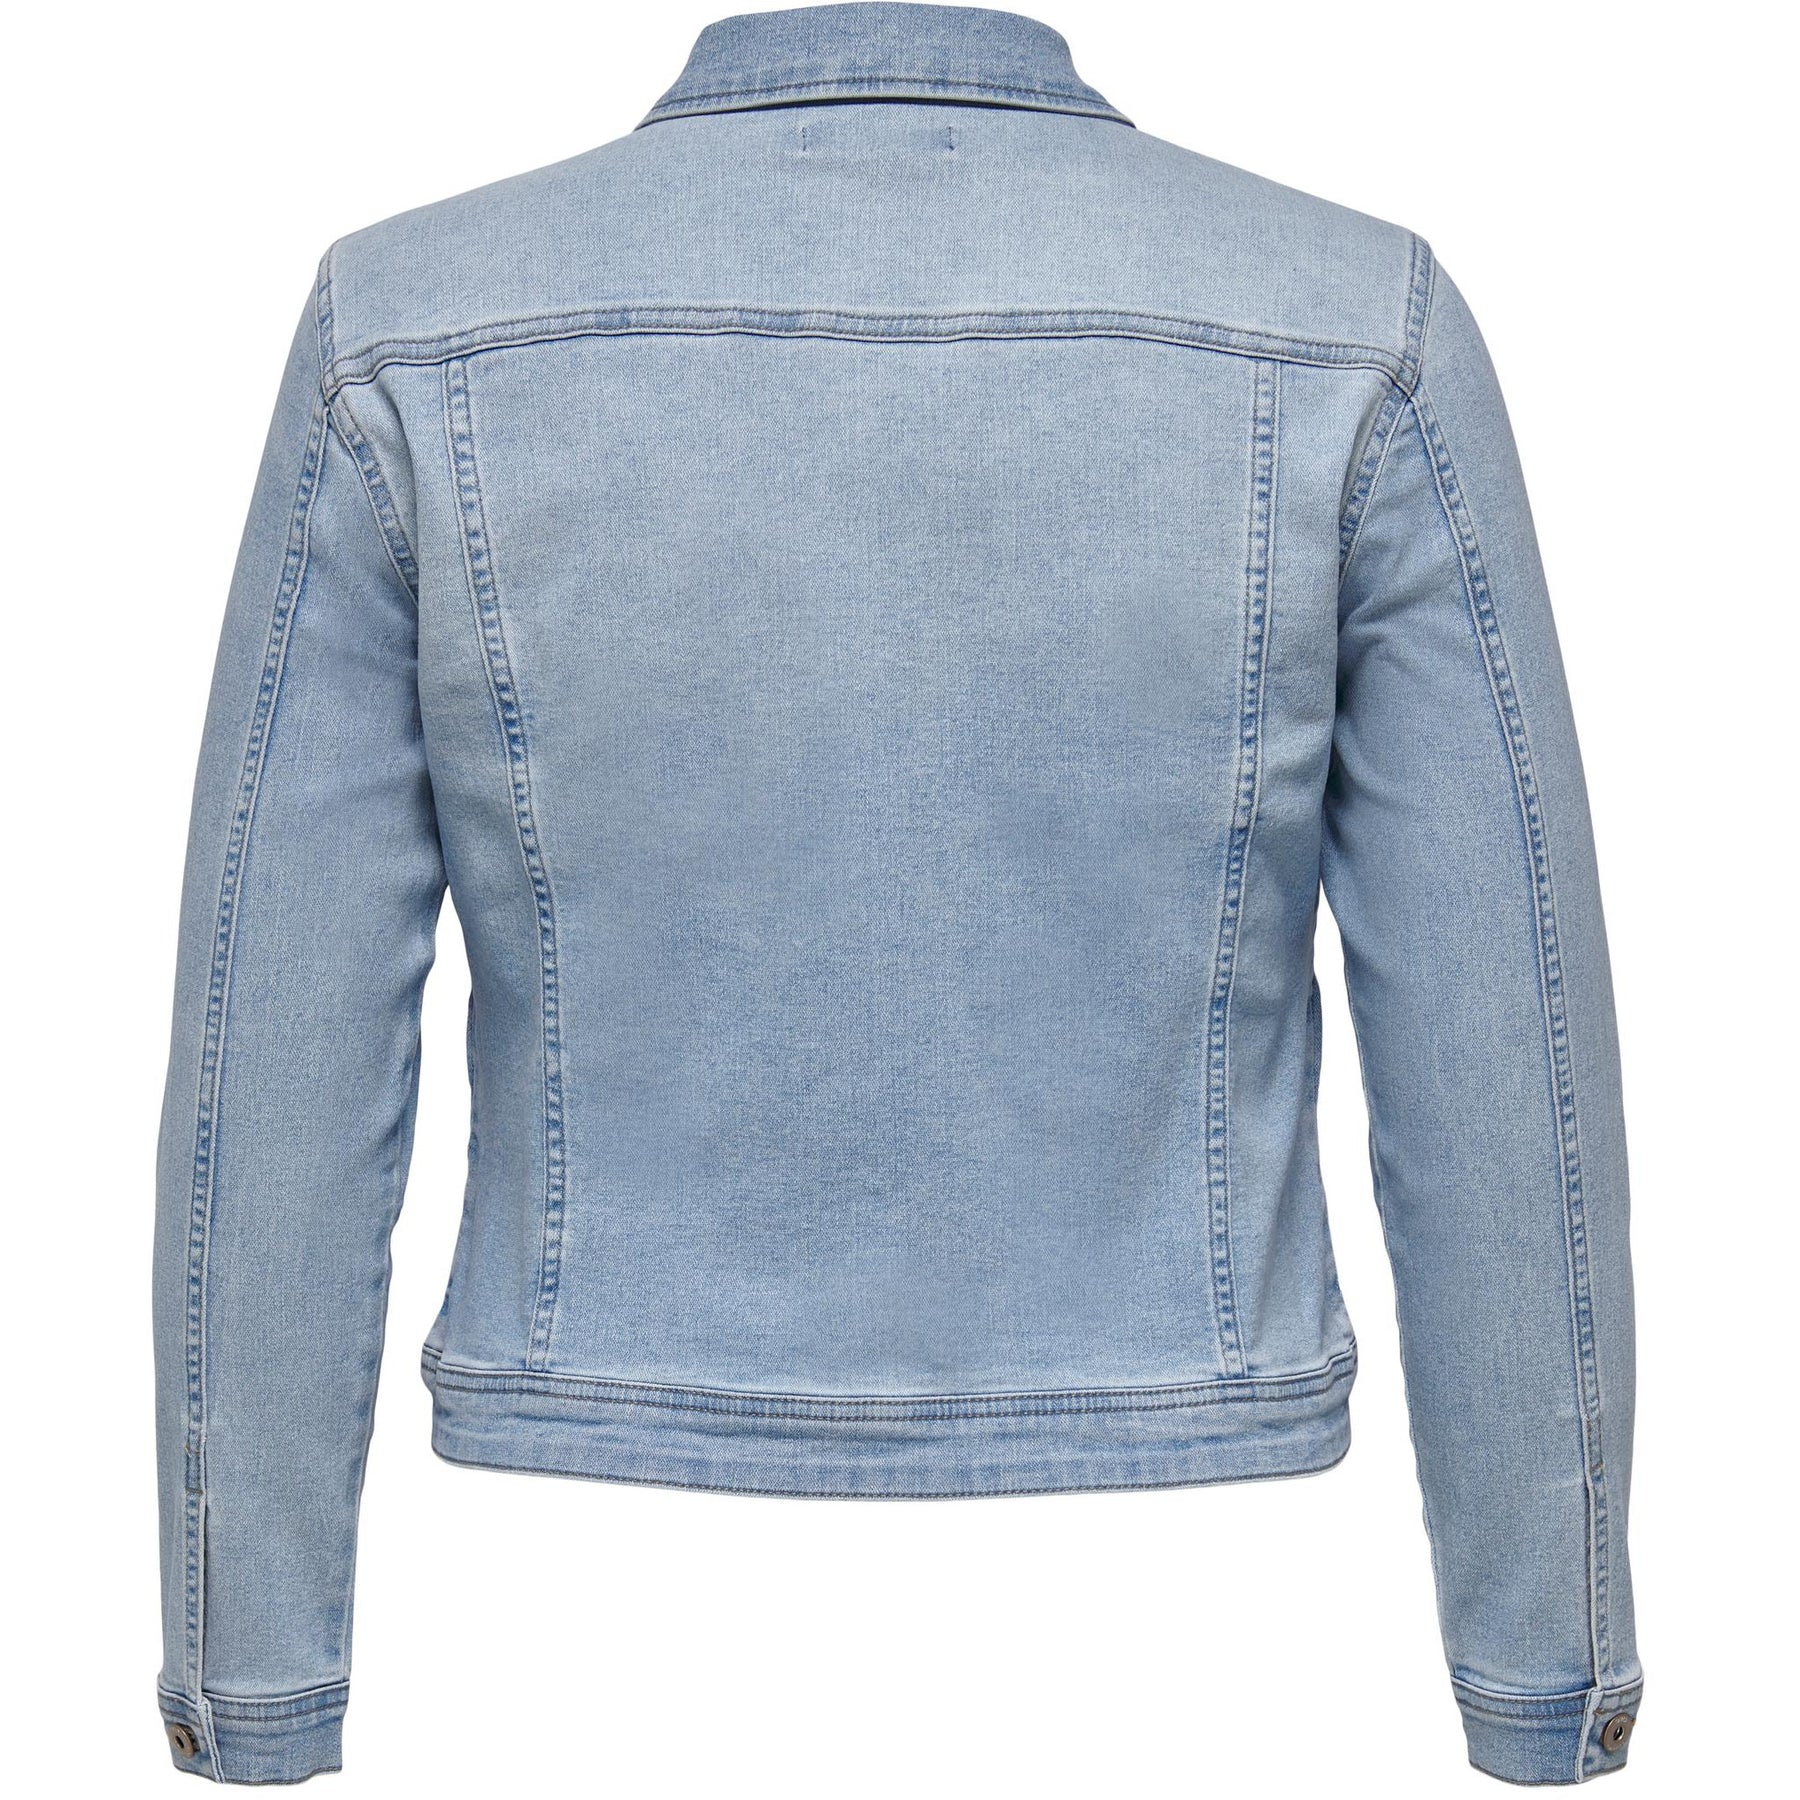 Only Carmakoma Denim Jacket in Pale Blue - Wardrobe Plus